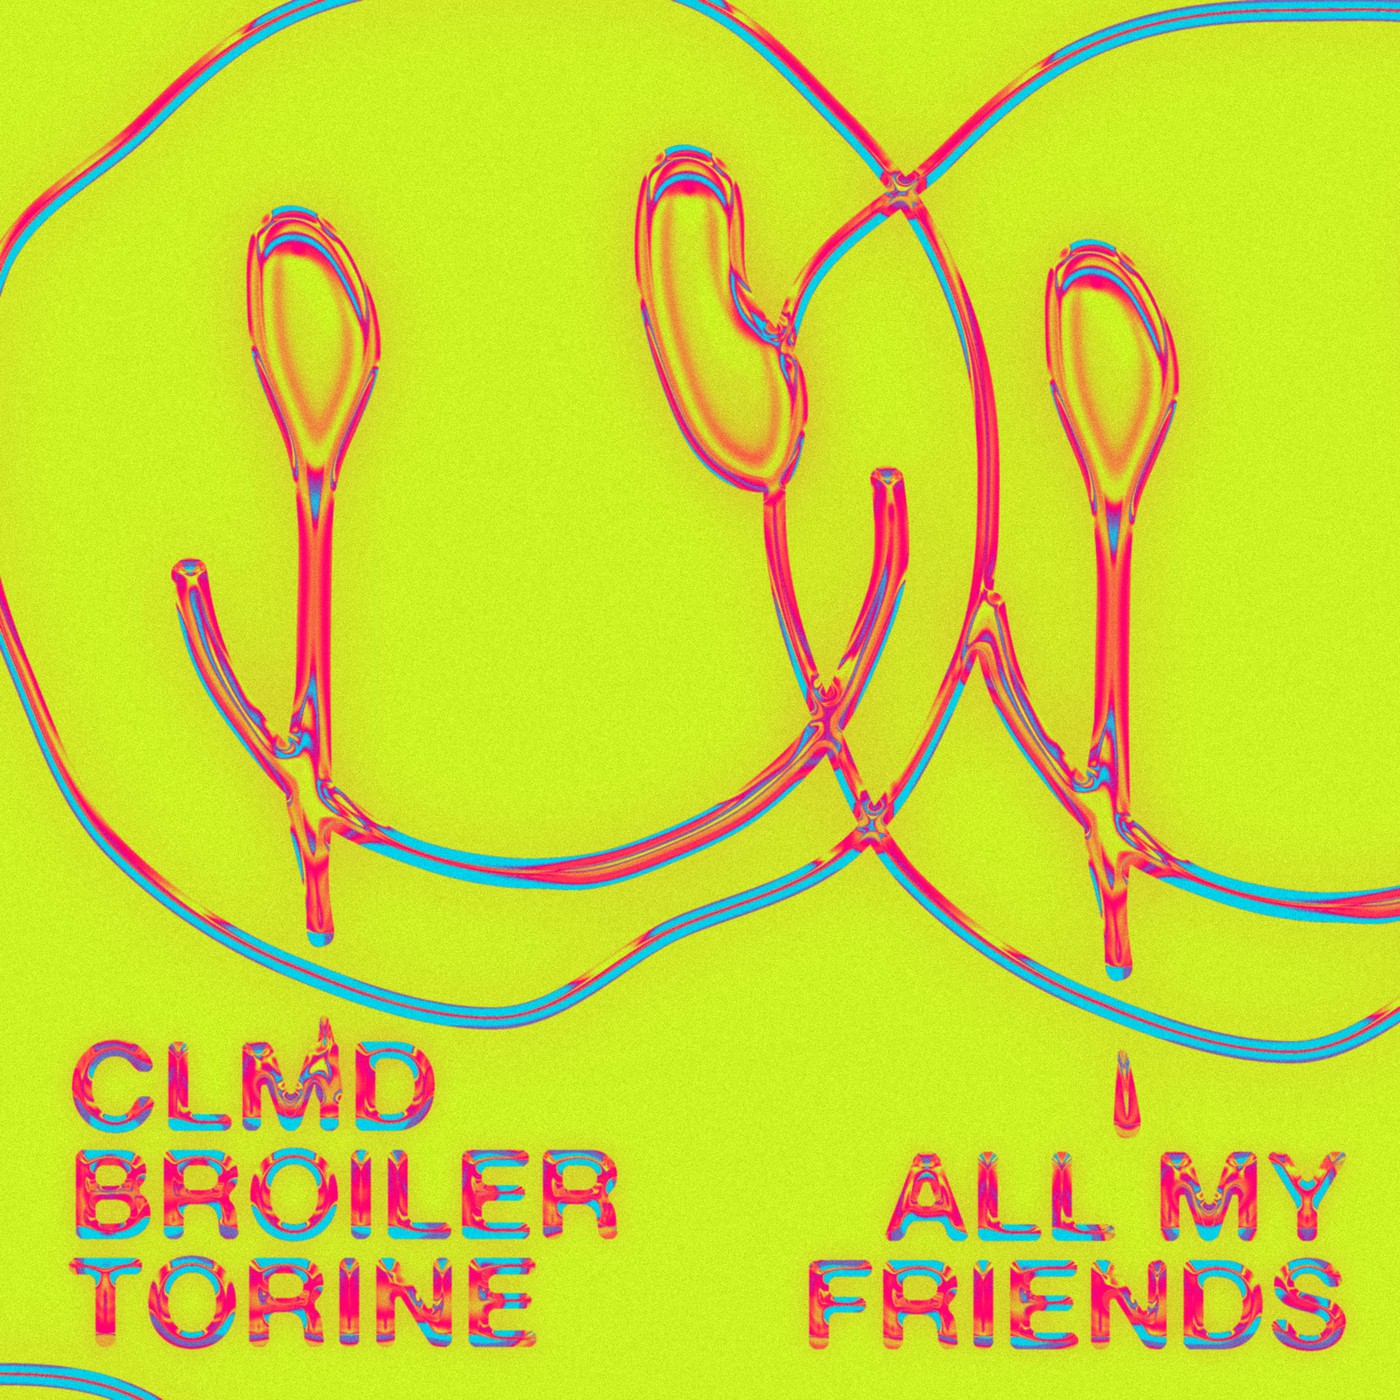 CLMD, Tortine & Broiler - All My Friends